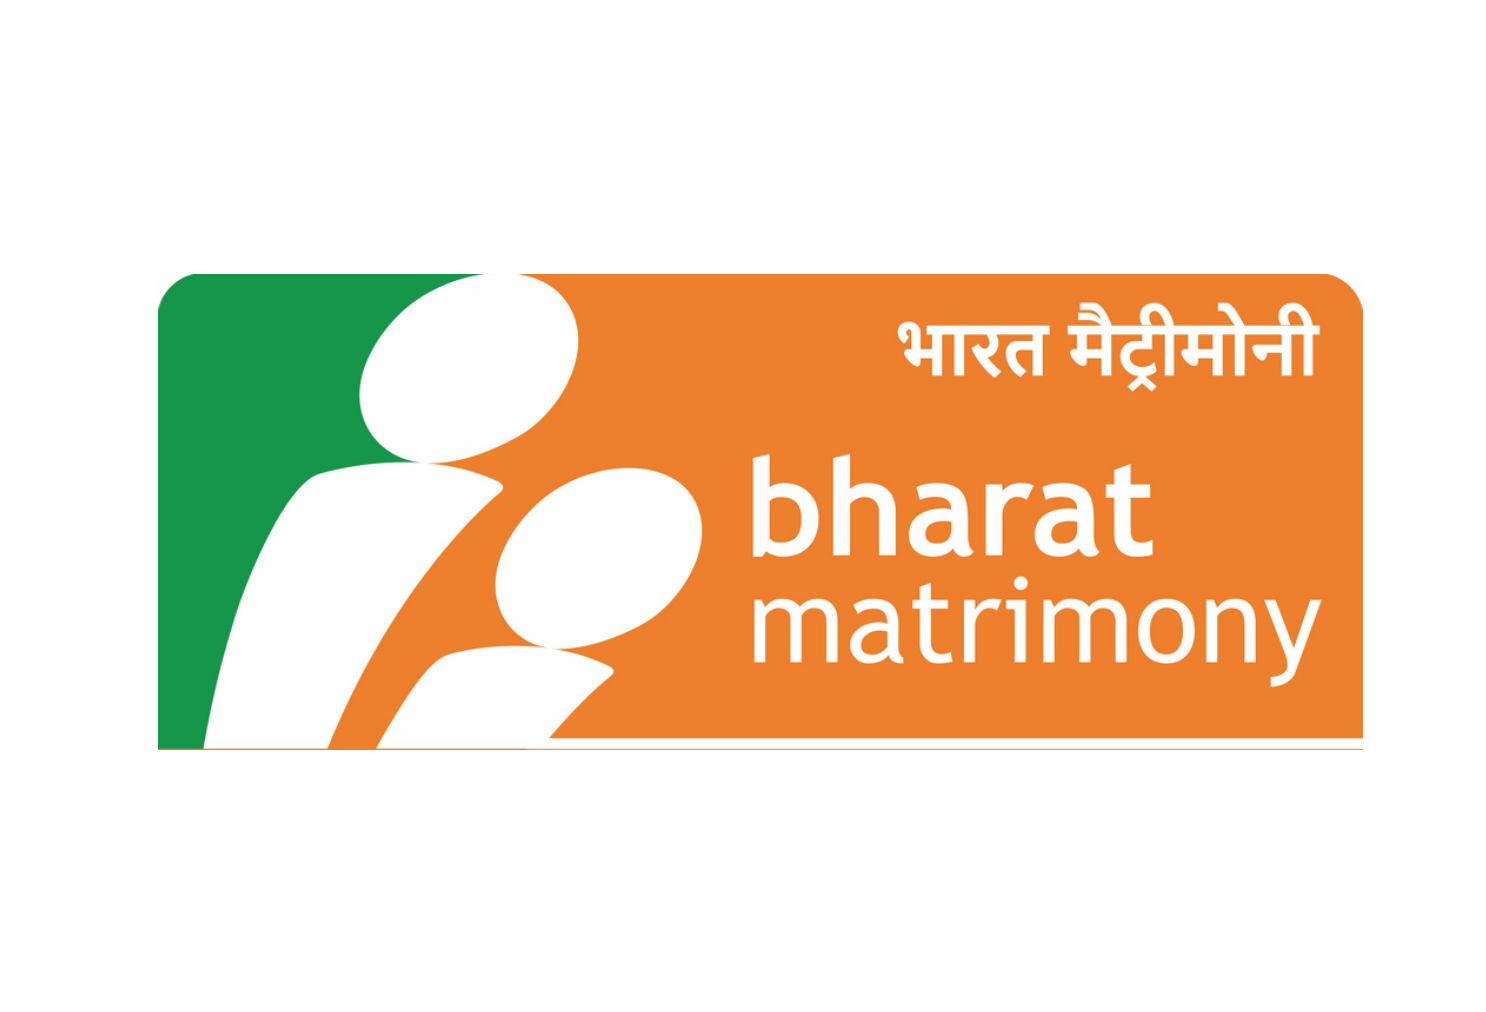 Bharatmatrimony.com